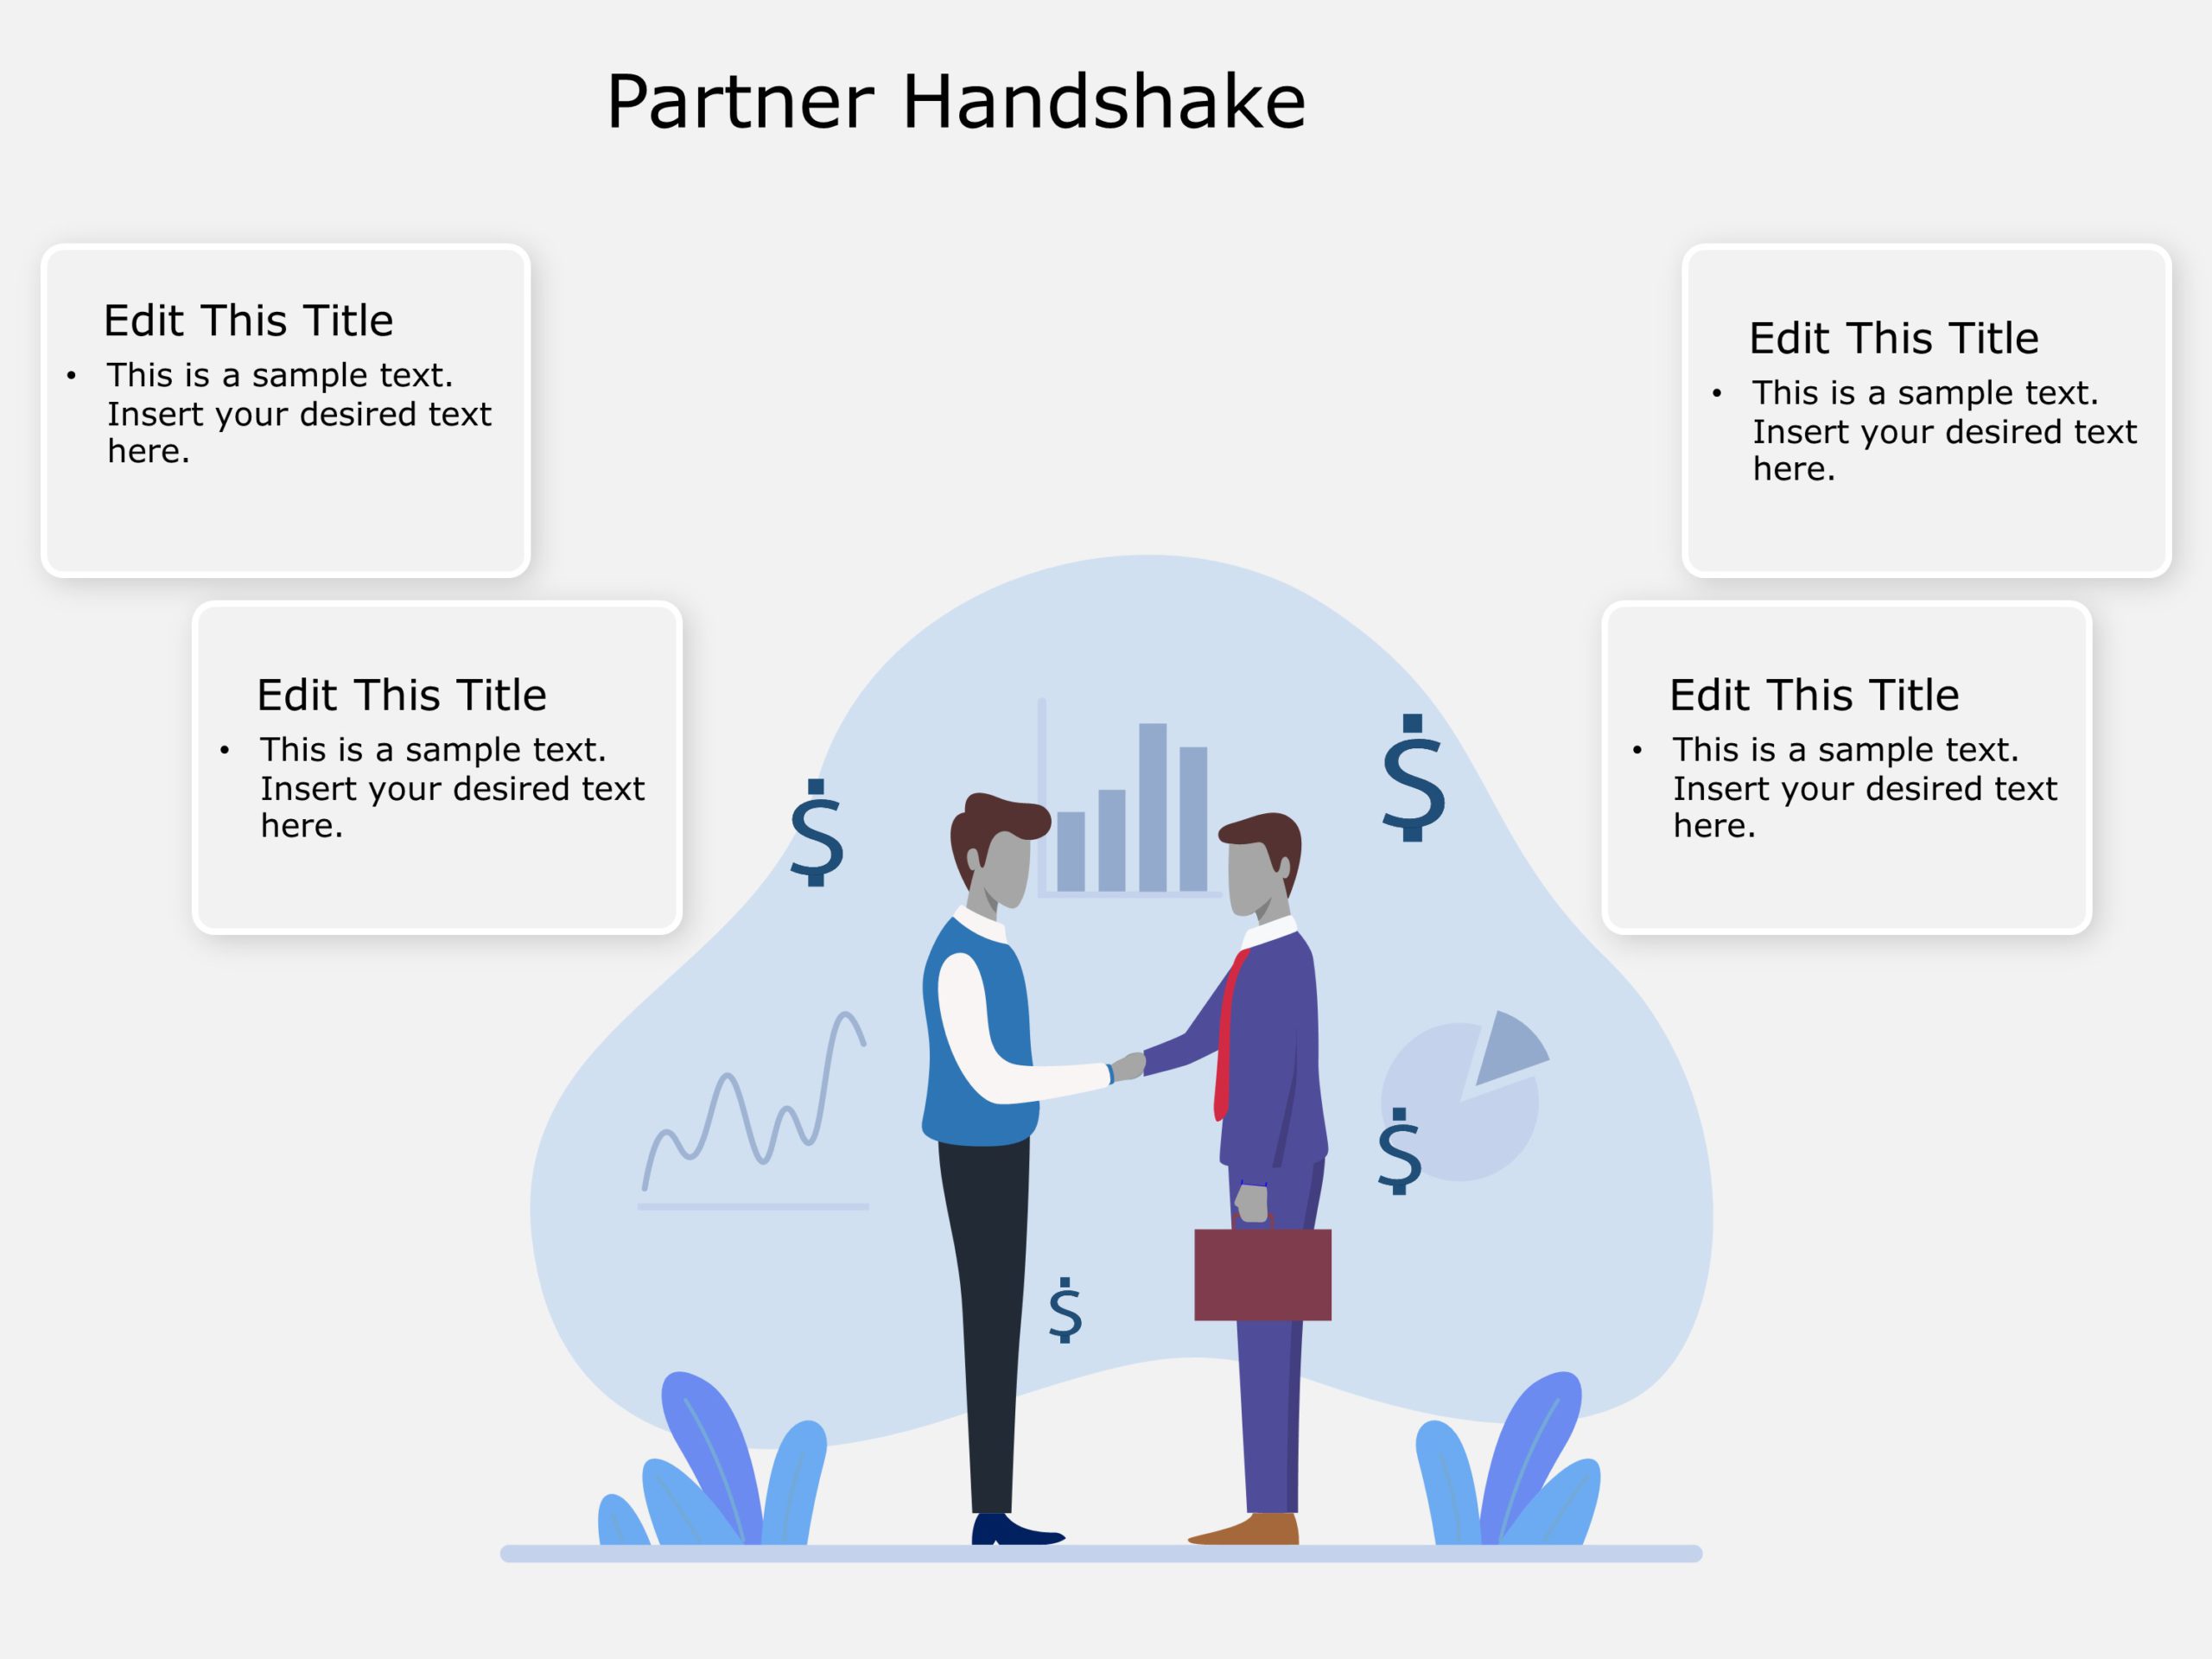 Partner Handshake PowerPoint Template